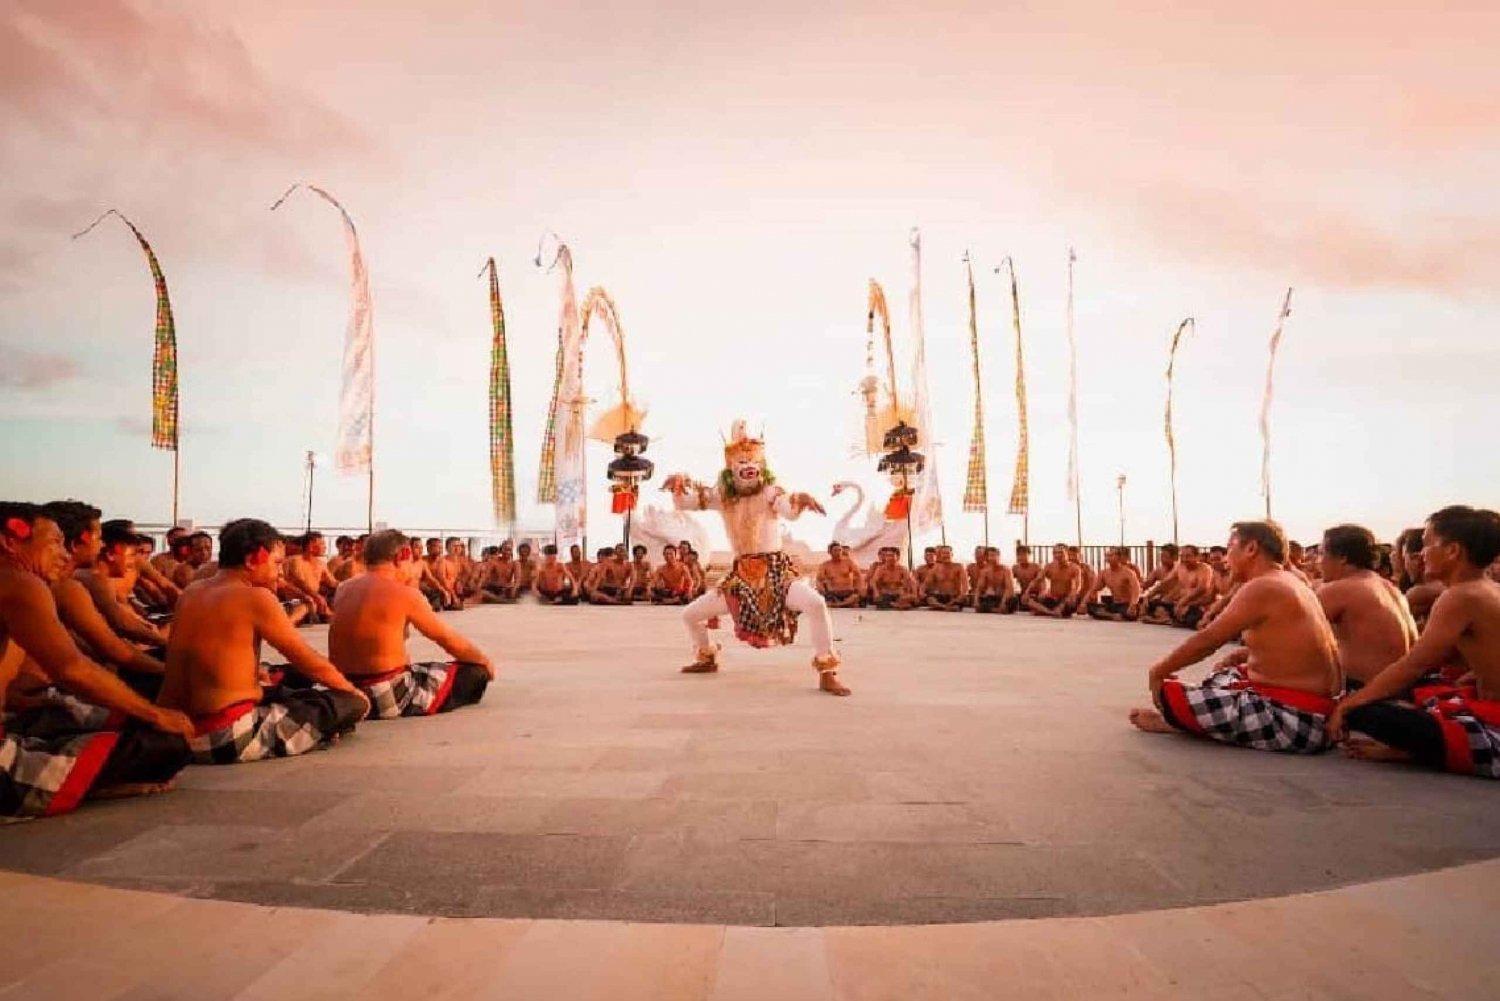 Bali: Melasti Beach Kecak Dance Show Biljetter